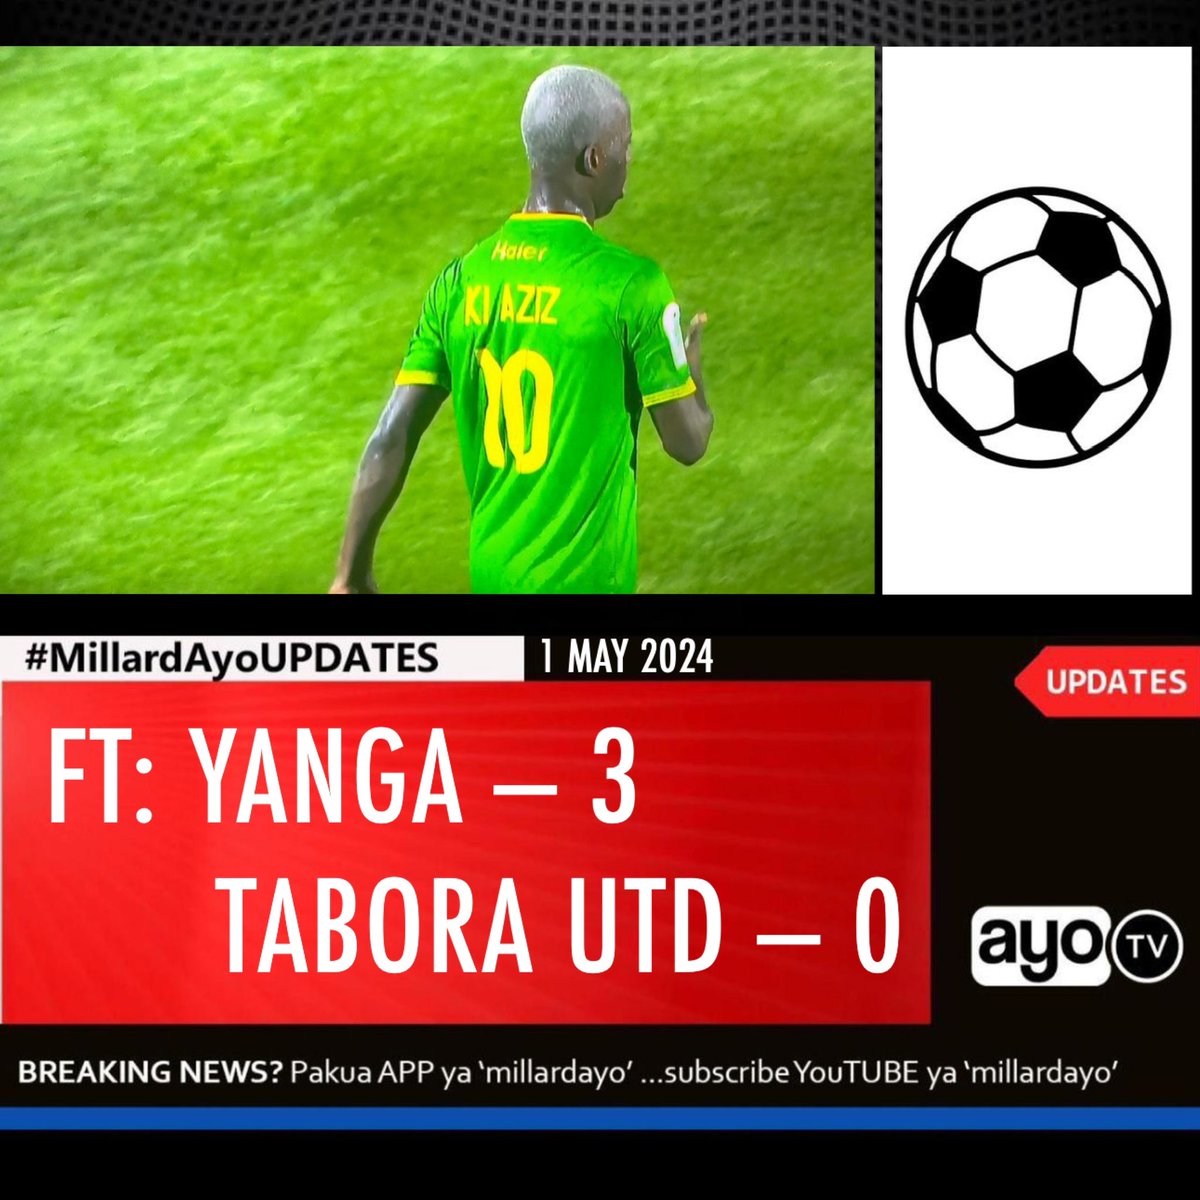 FT: Yanga SC 3-0 Tabora UTD (Aziz Ki 35’ Musonda 66’ Guede 83’) #FACUP

Yanaga wanafuzu nusu fainali ya FA CUP kwa kuitoa Tabora UTD